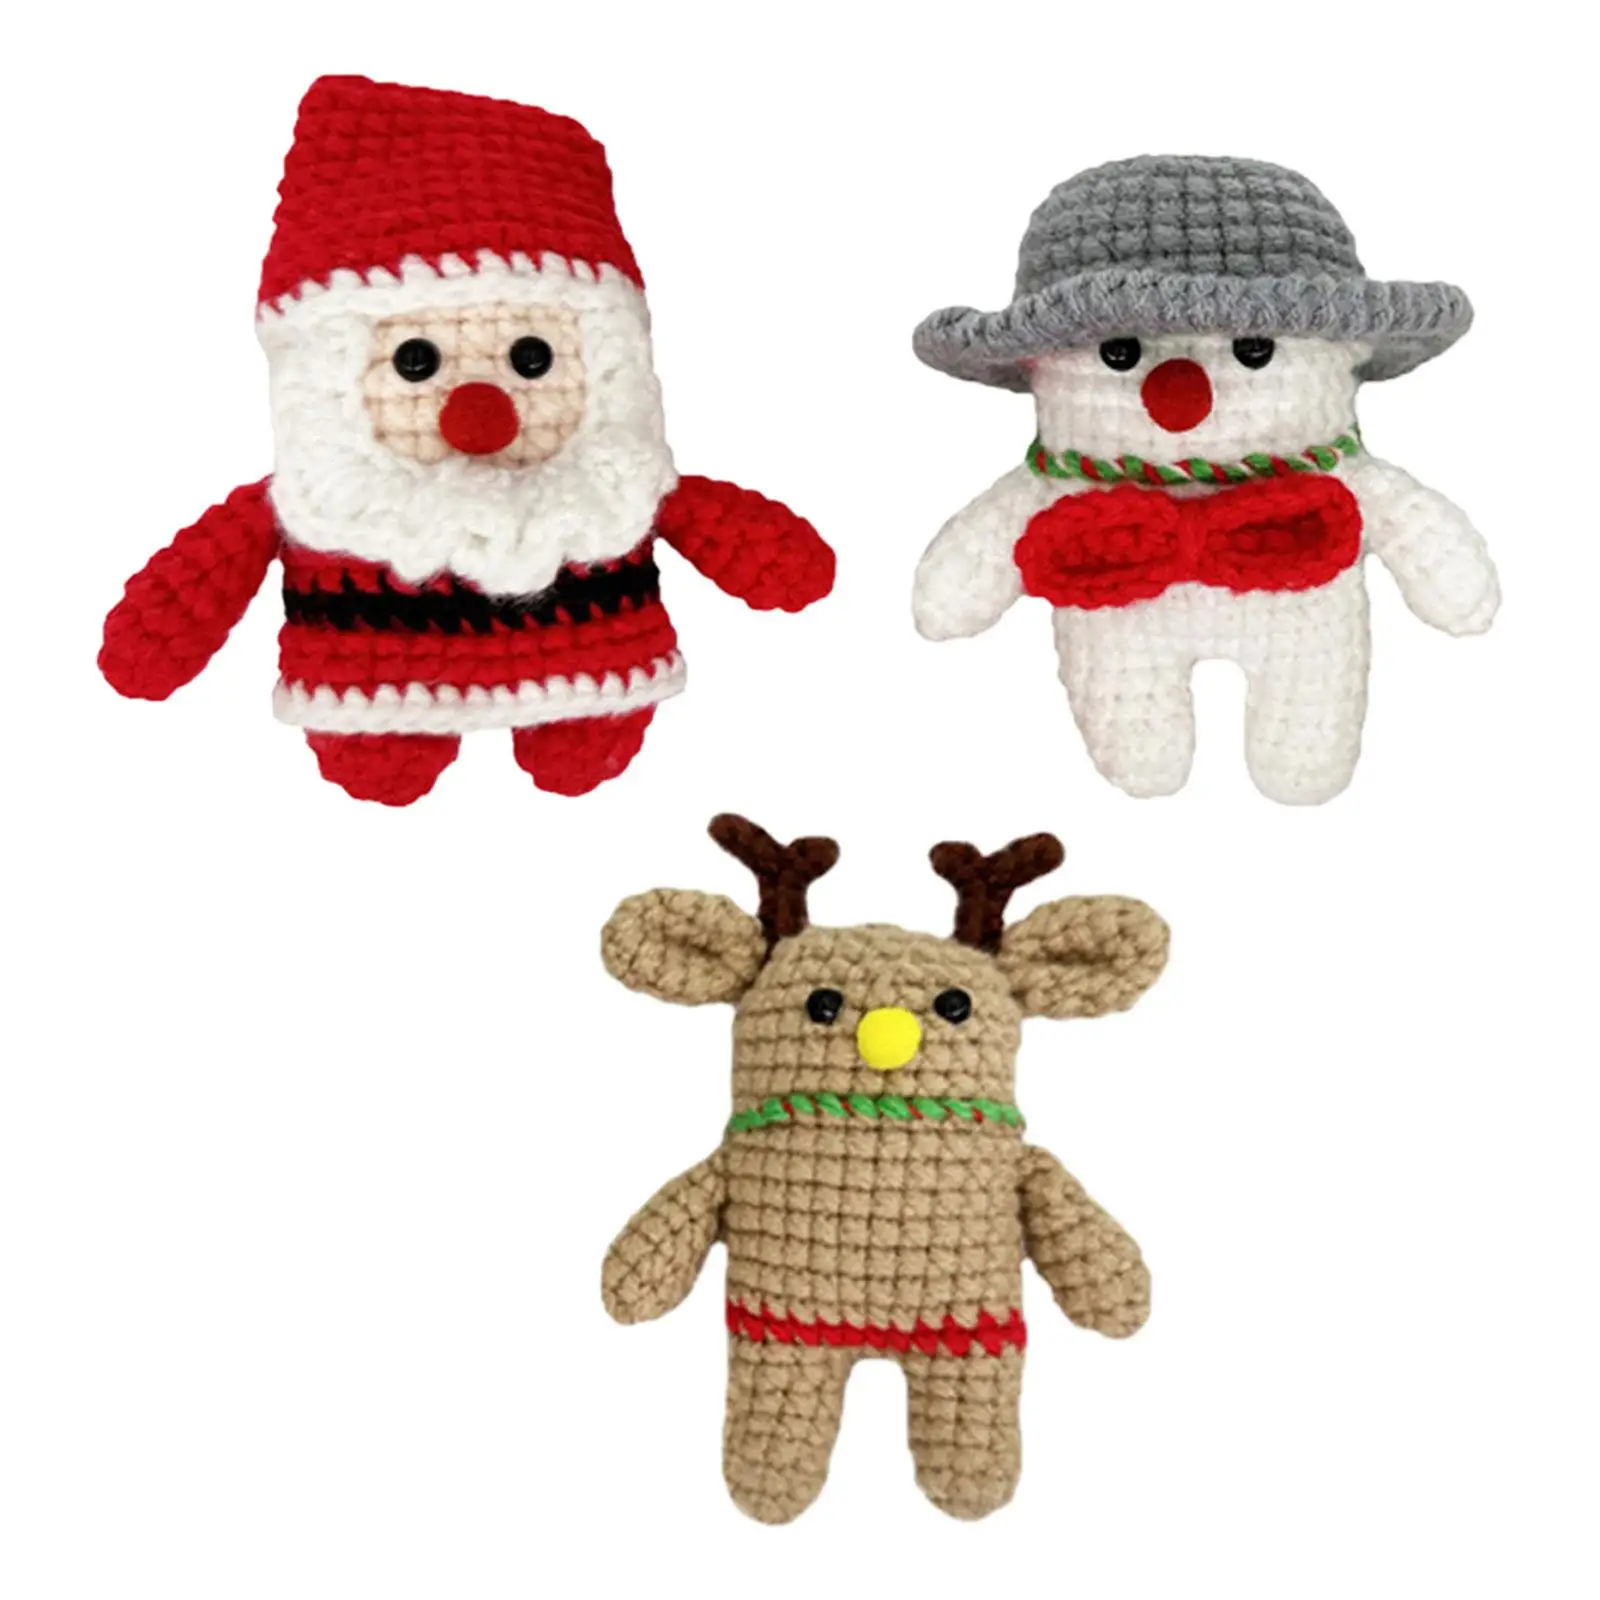 Crochet Beginner Set Christmas Deer Toy Practical Household Party Toy Crochet Material Set for Starter Adults Children Teens